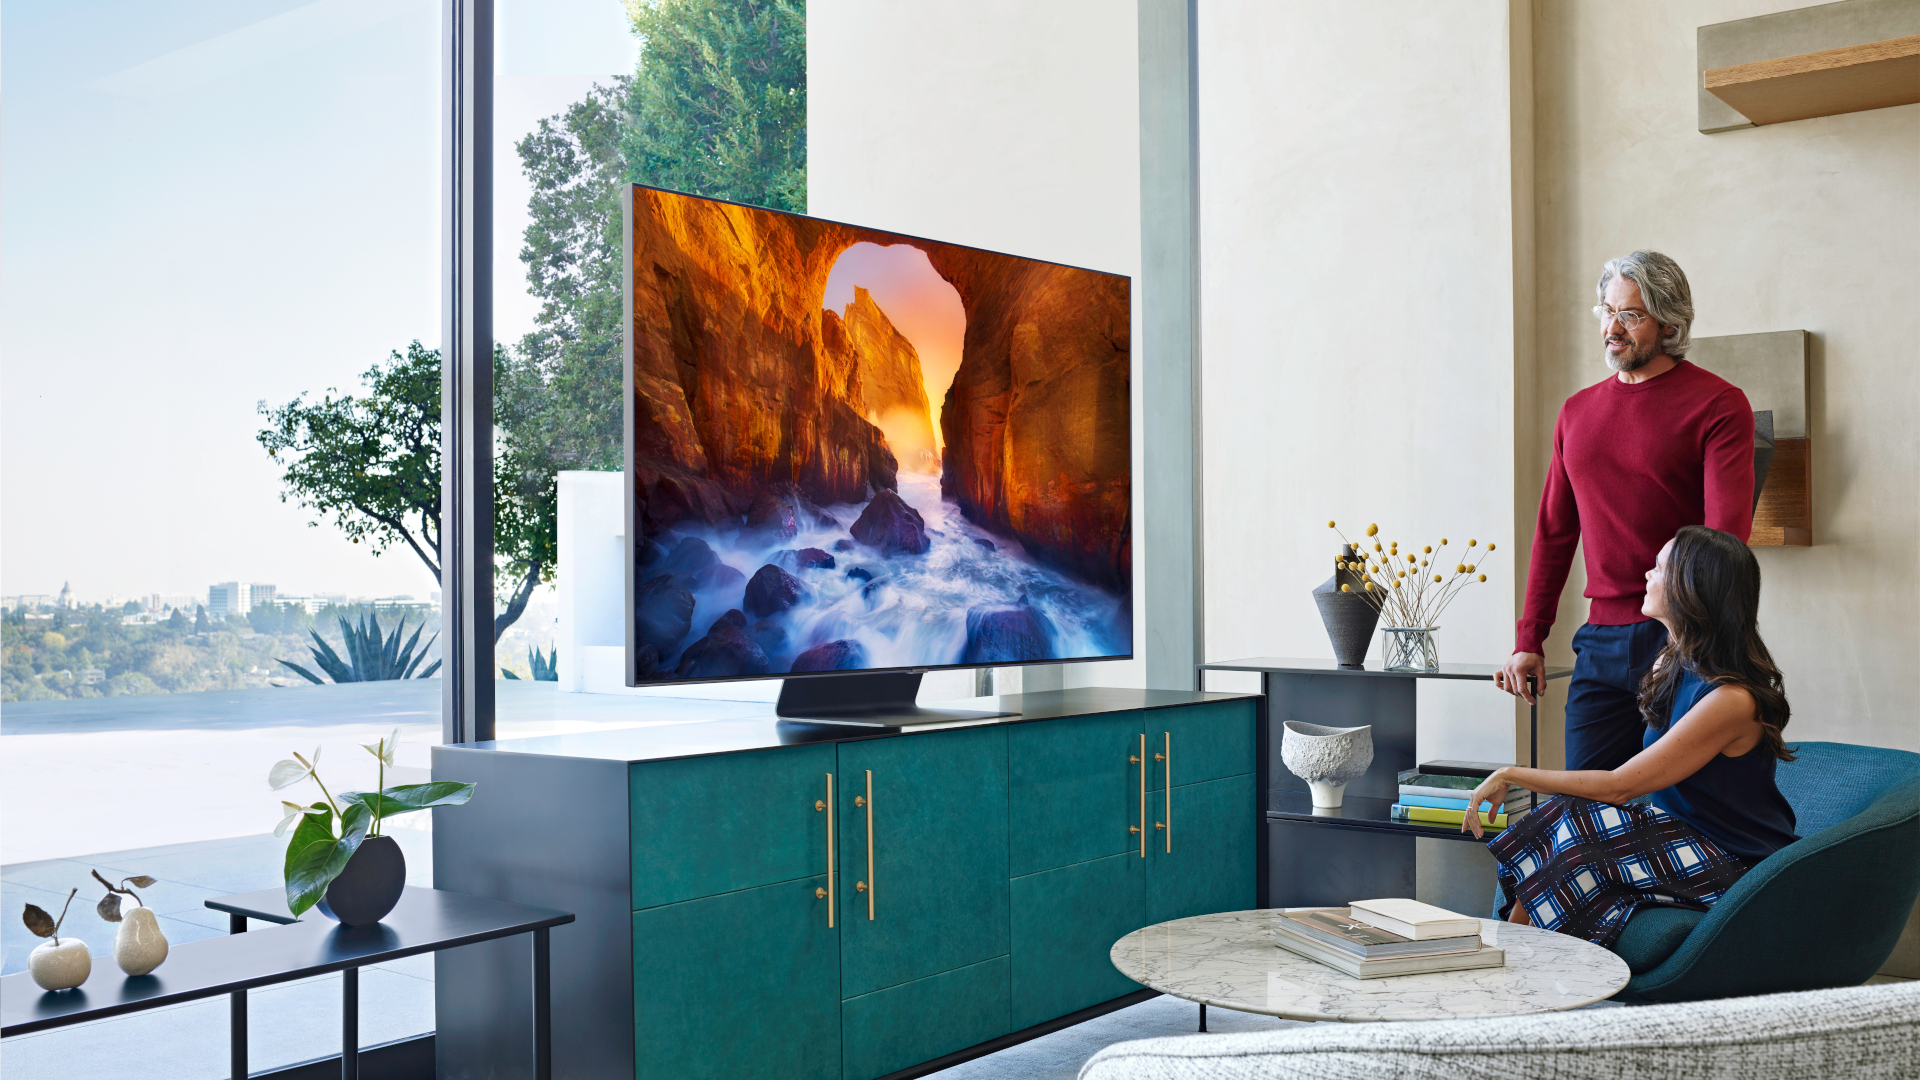 Samsung QN65Q90R 65" Smart QLED 4K Ultra HD TV with HDR 2019 model 